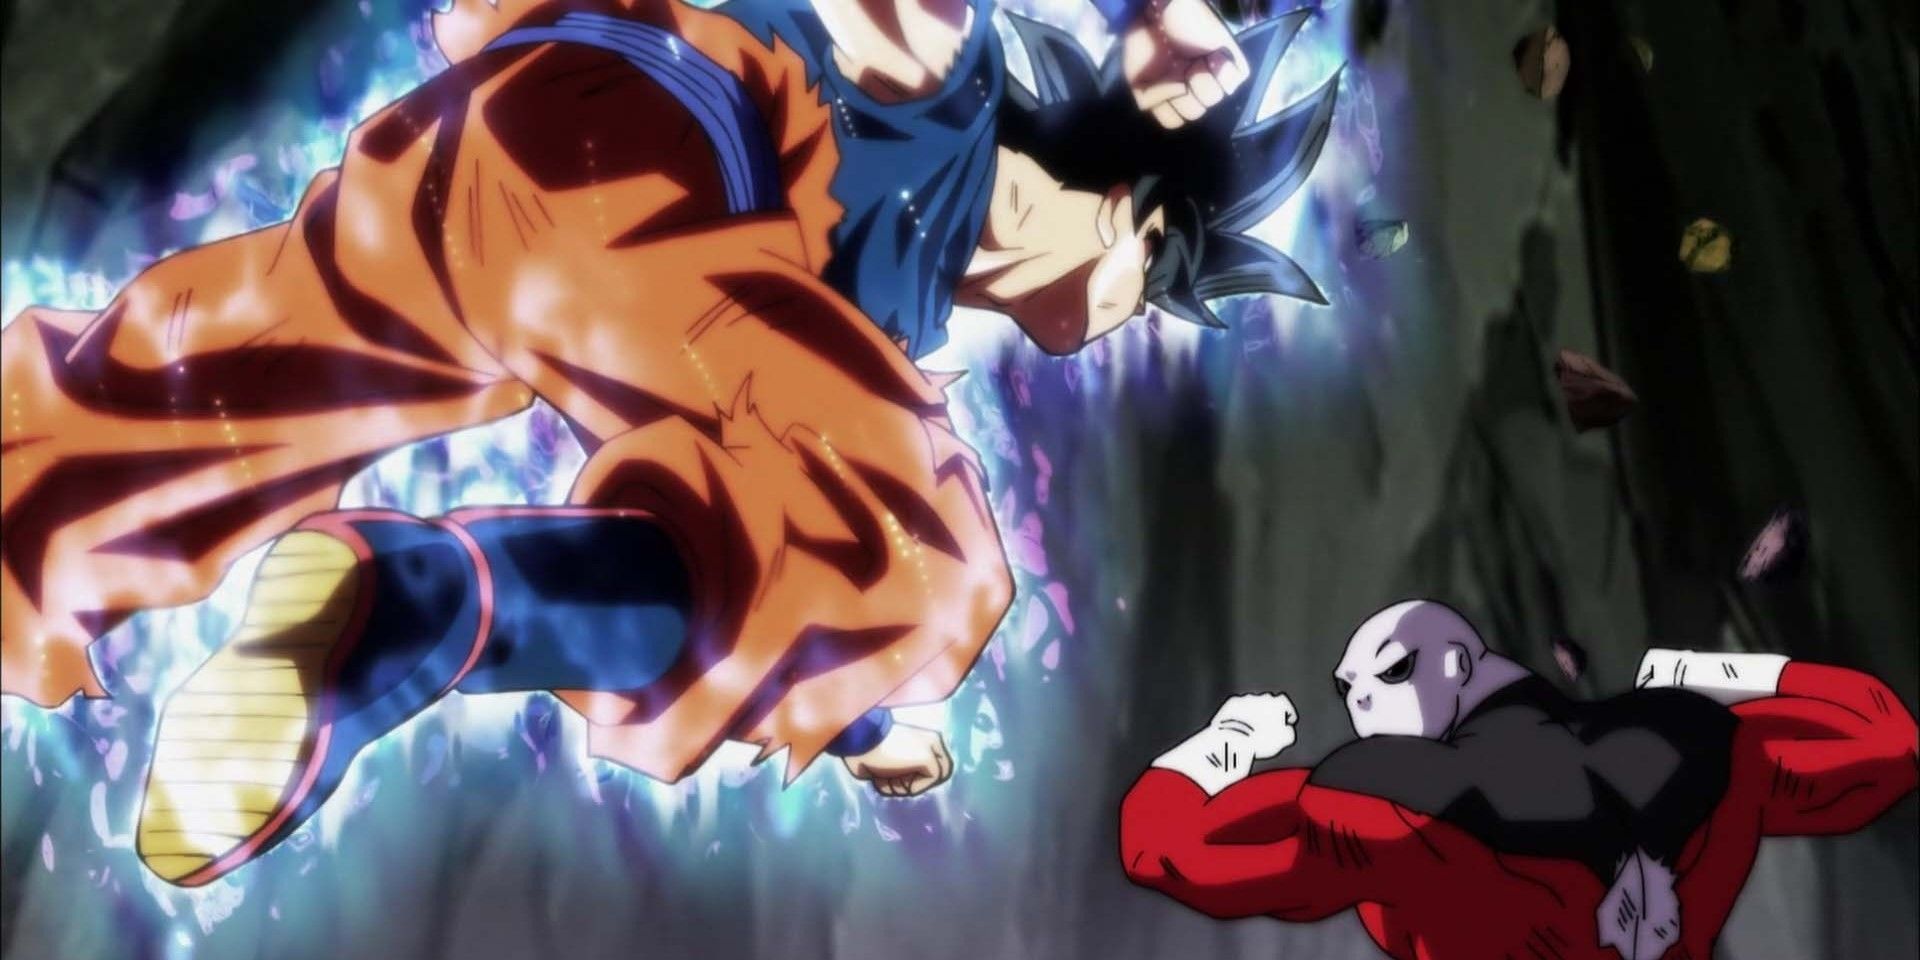 Goku in his Ultra Instinct, and fighting Jiren.